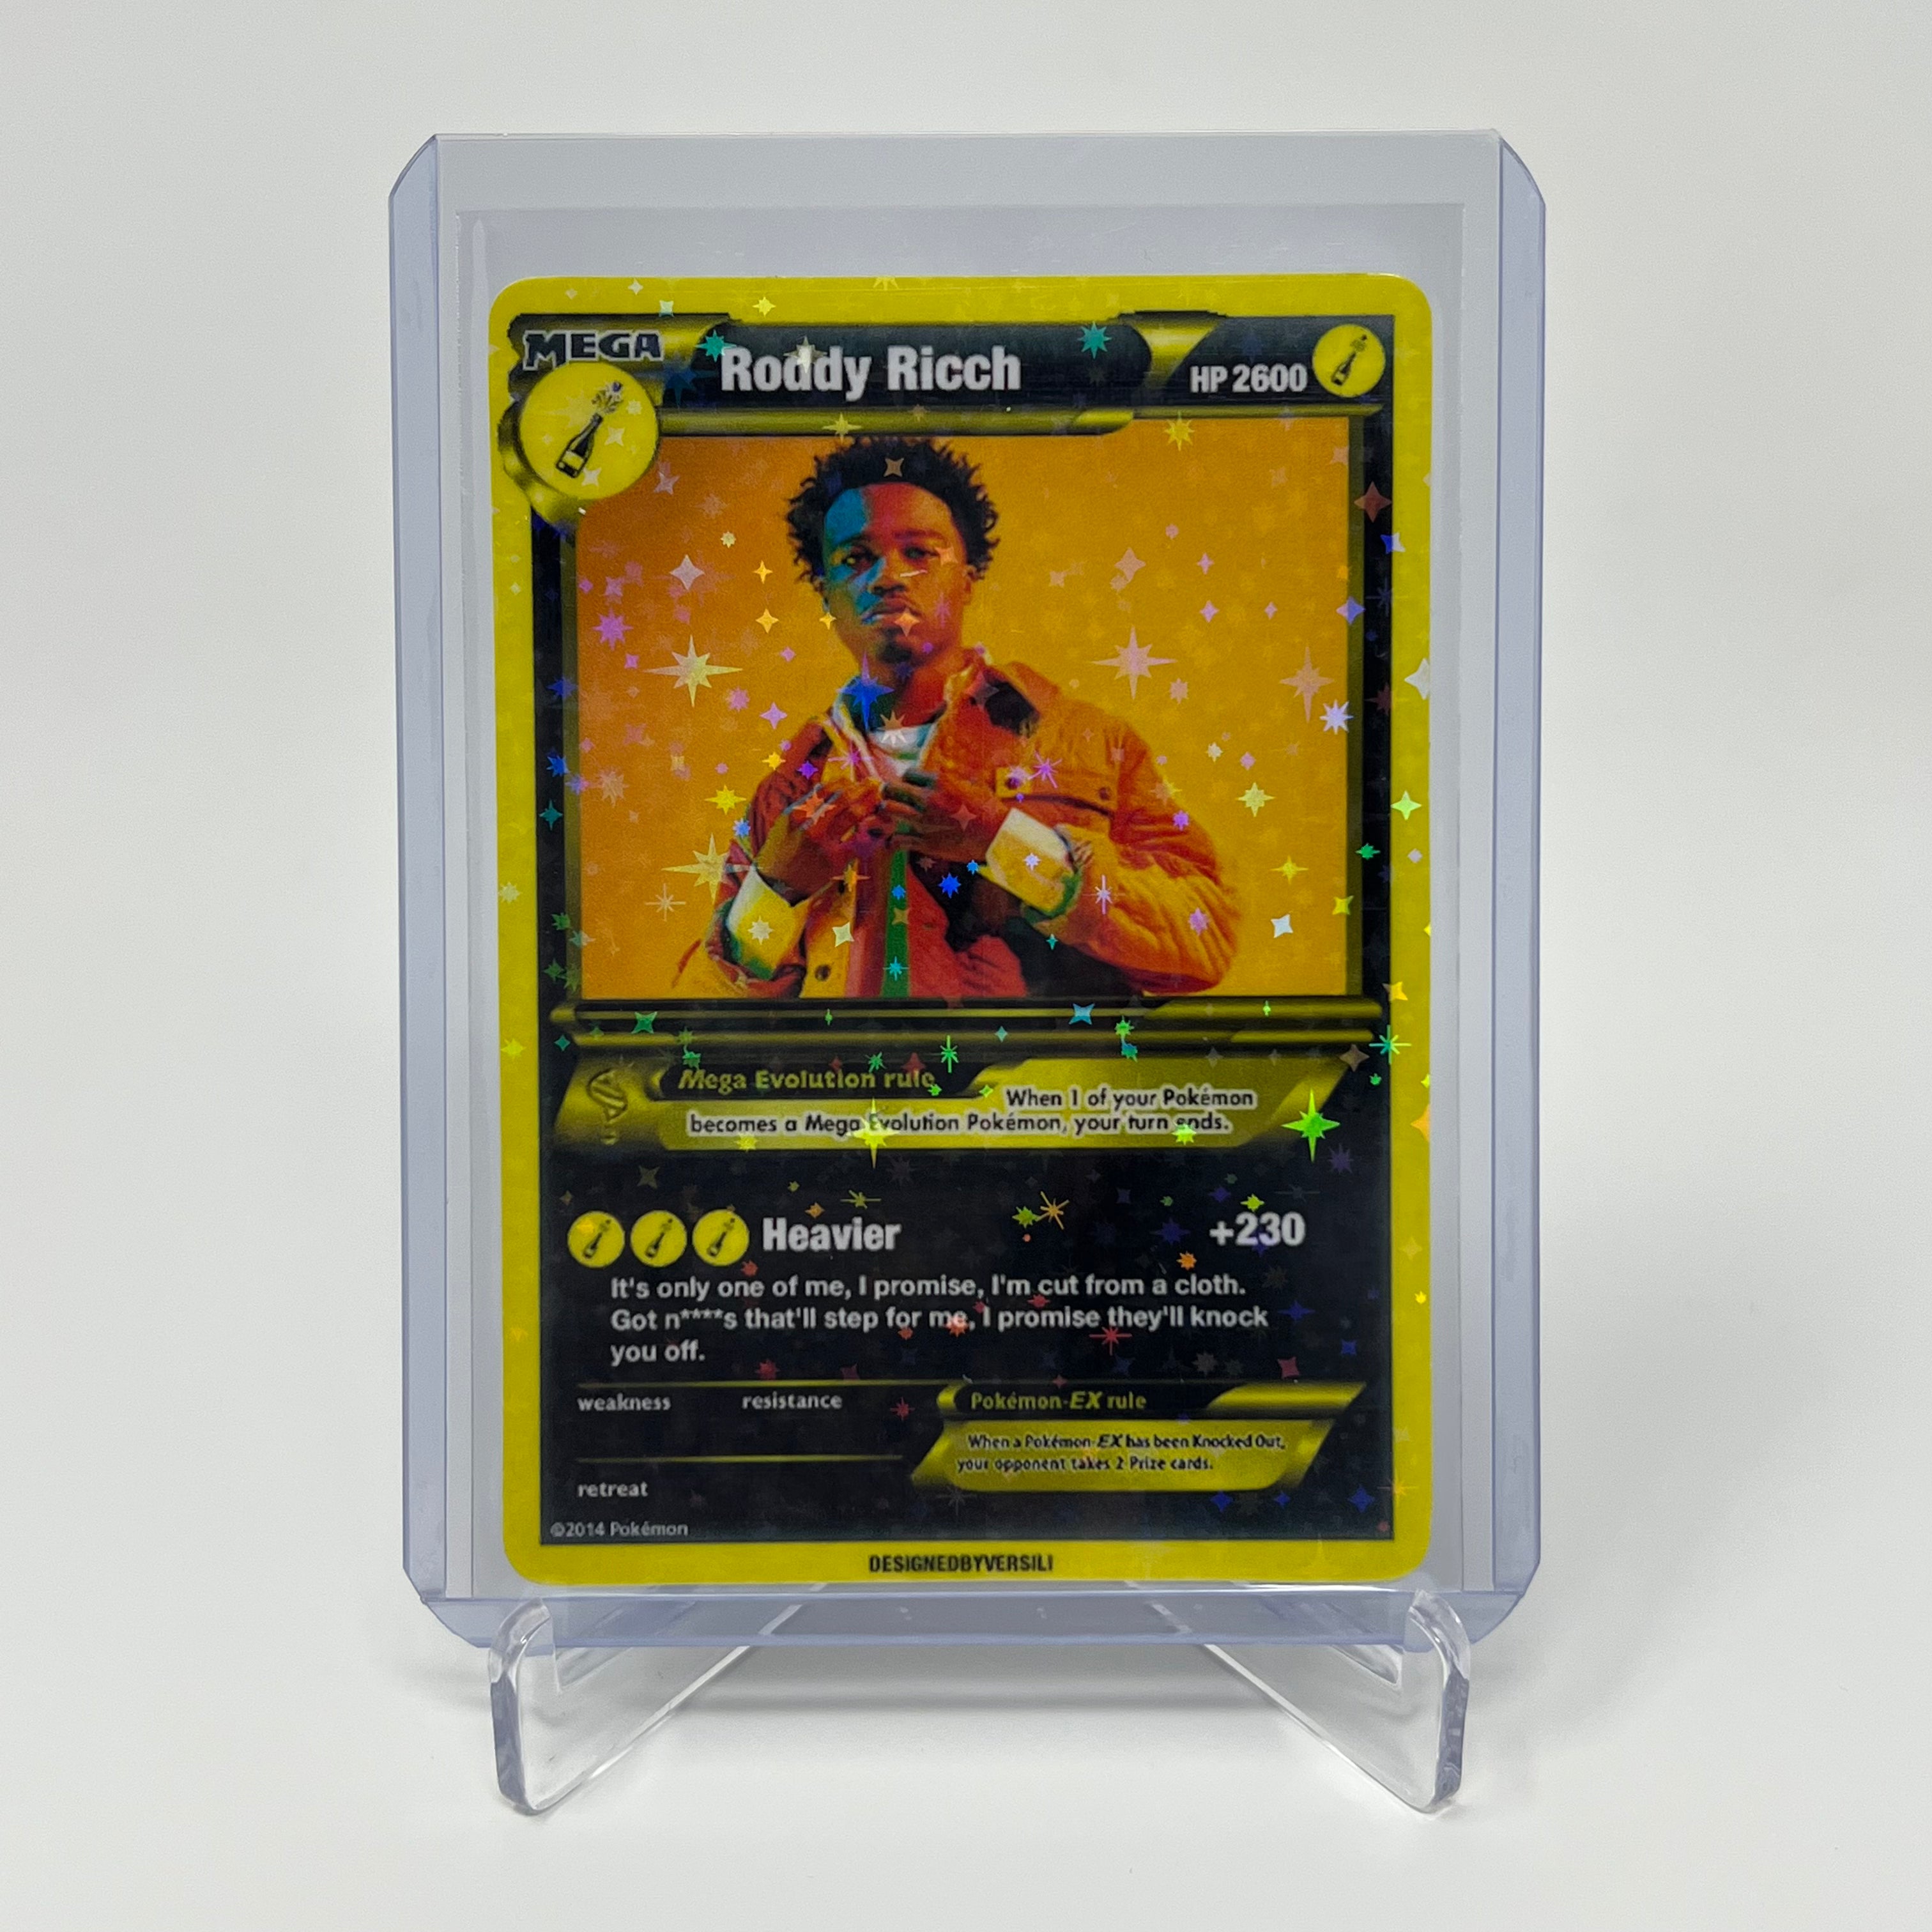 Roddy Ricch Pokémon Card (New Years)